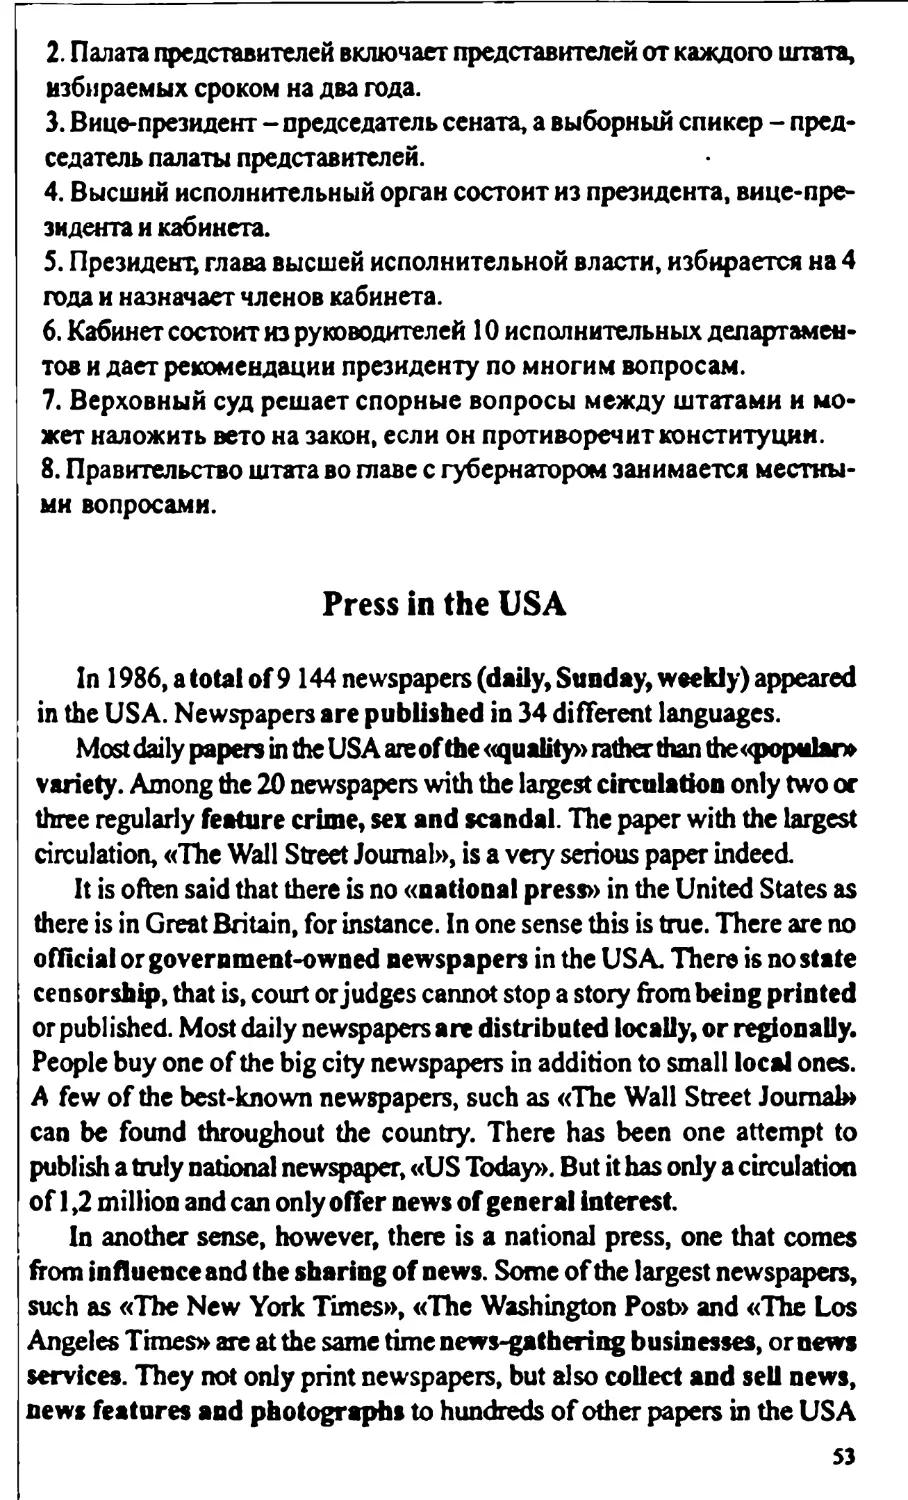 Press in the USA